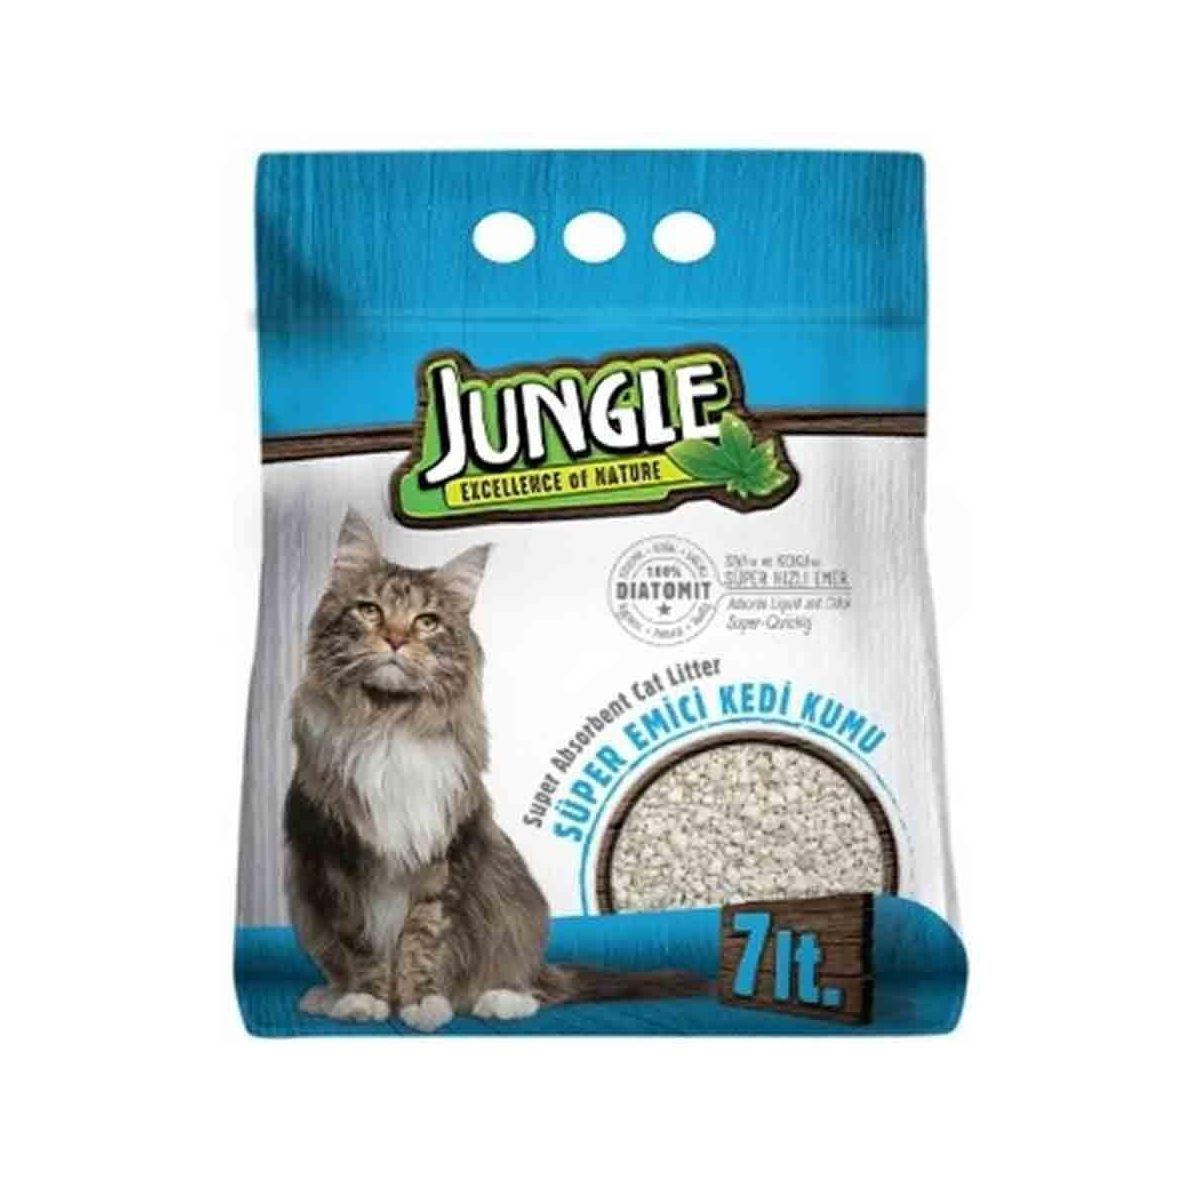 Jungle Kedi Kumu Fiyatlari